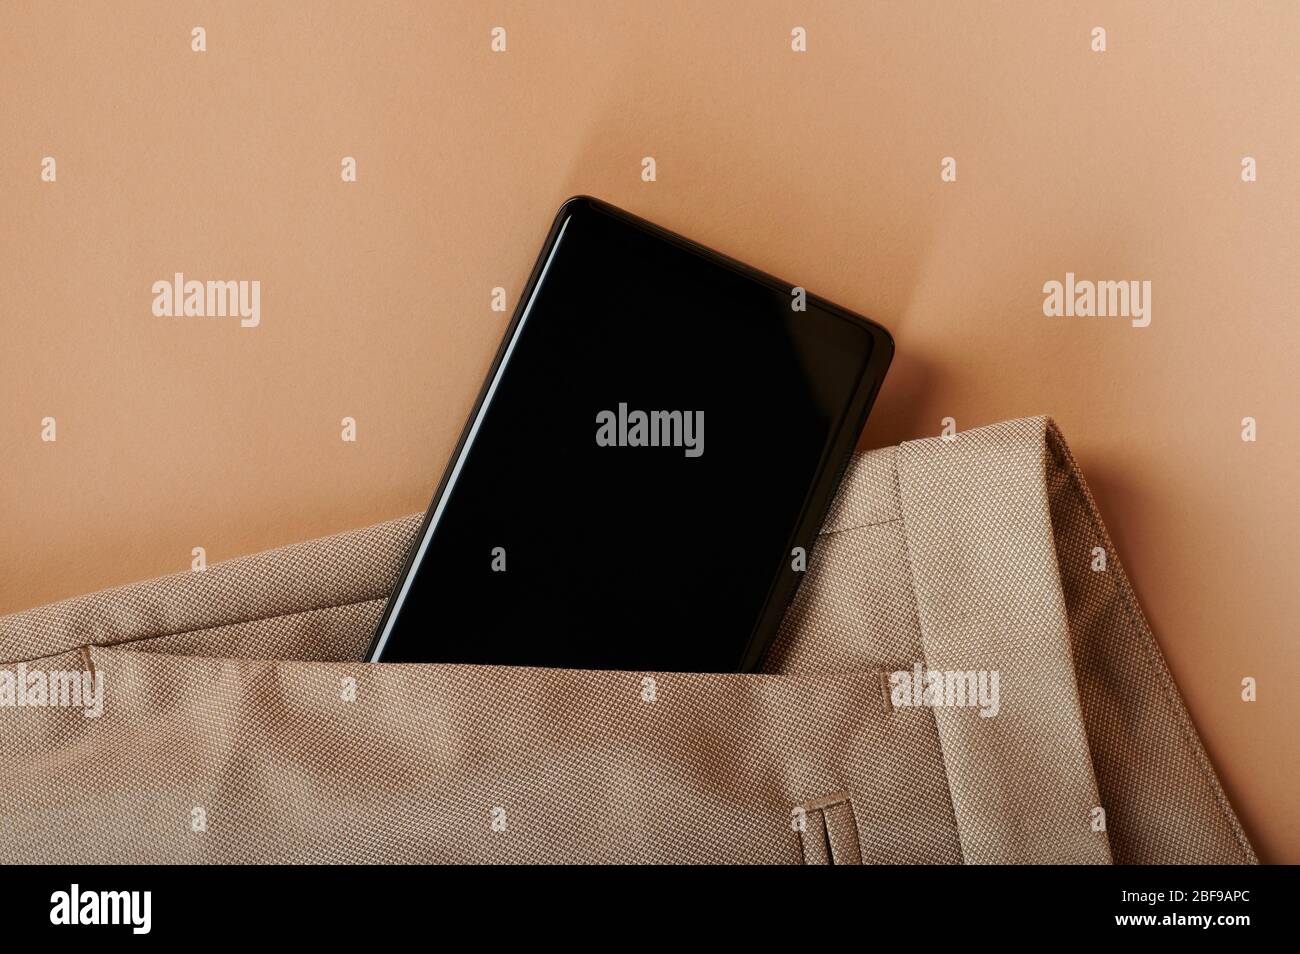 Black screen of smartphone in beige color pants pocket Stock Photo